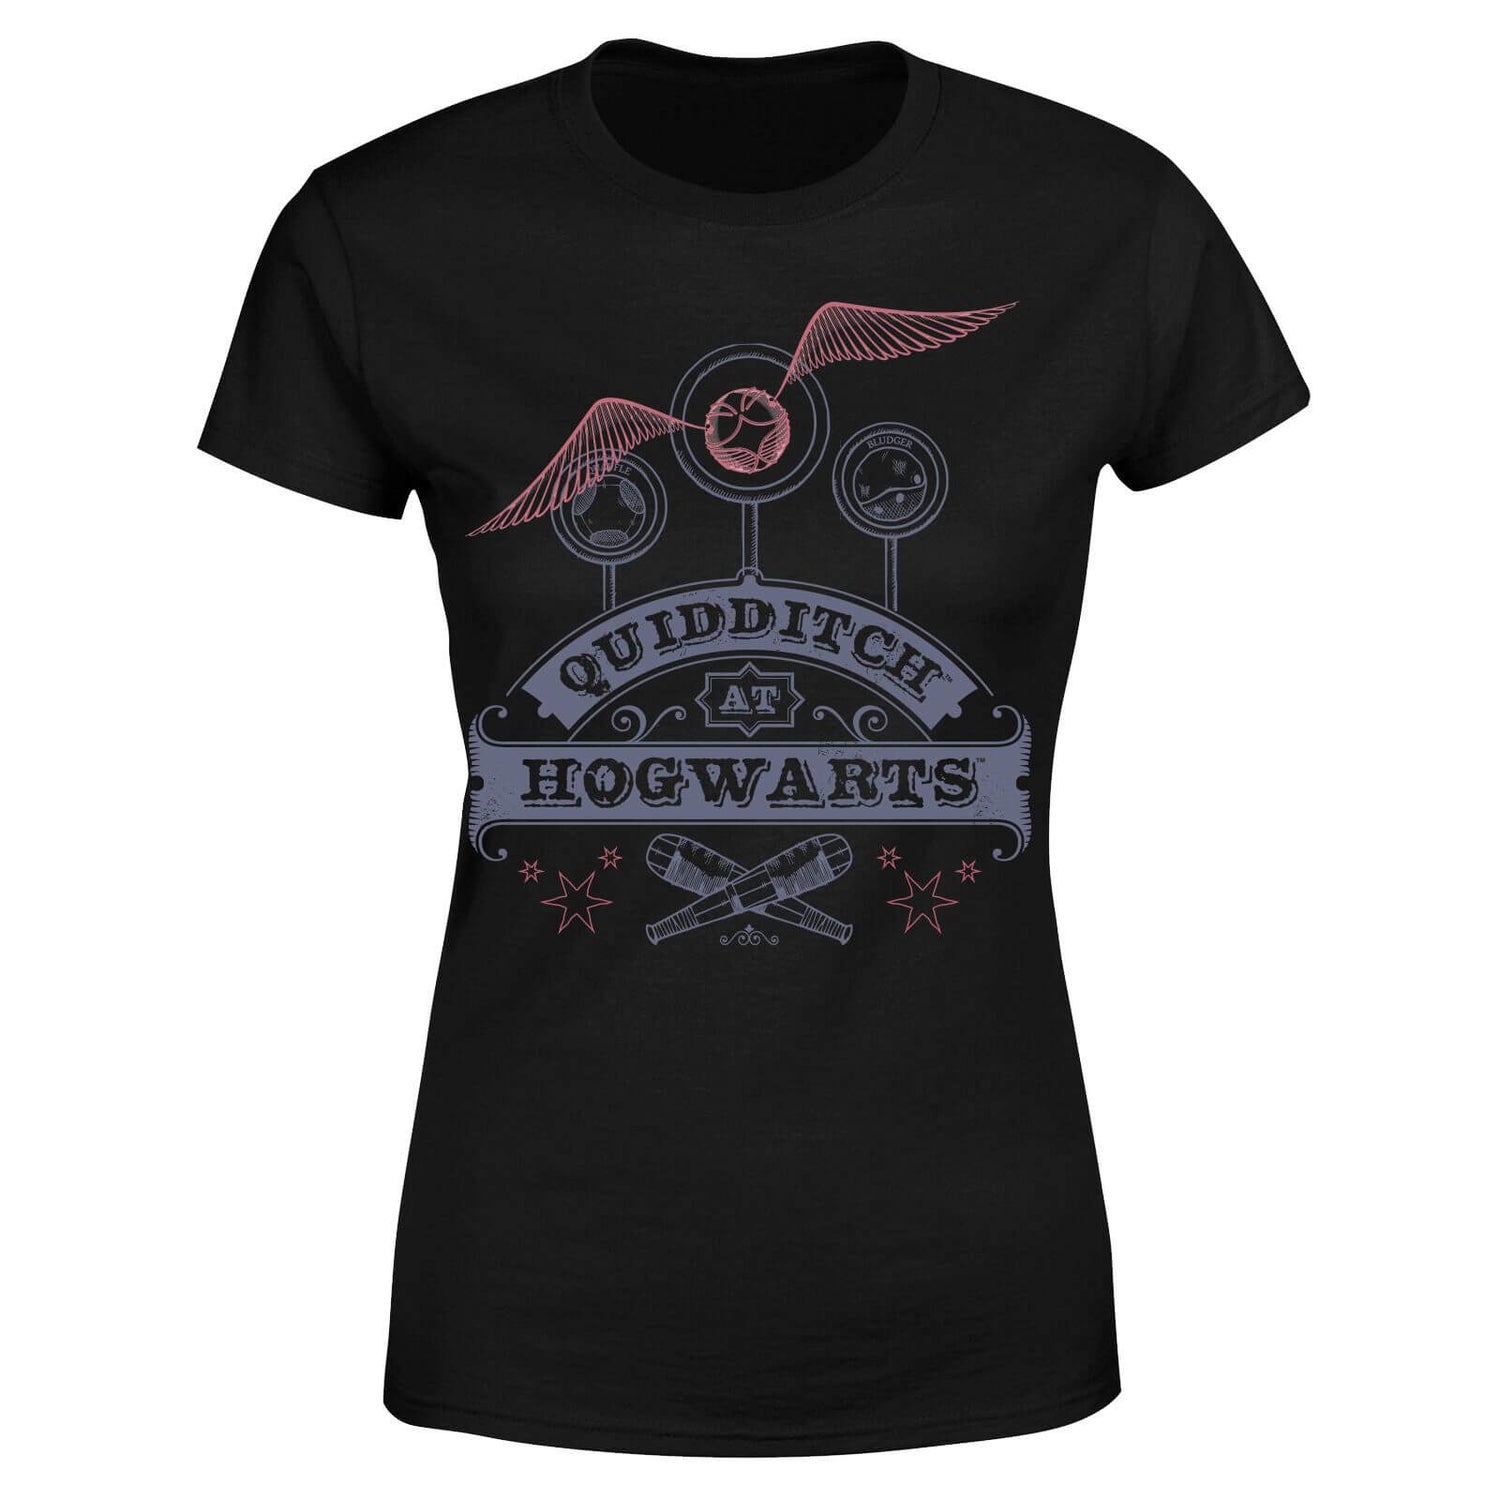 Harry Potter Quidditch At Hogwarts Women's T-Shirt - Black